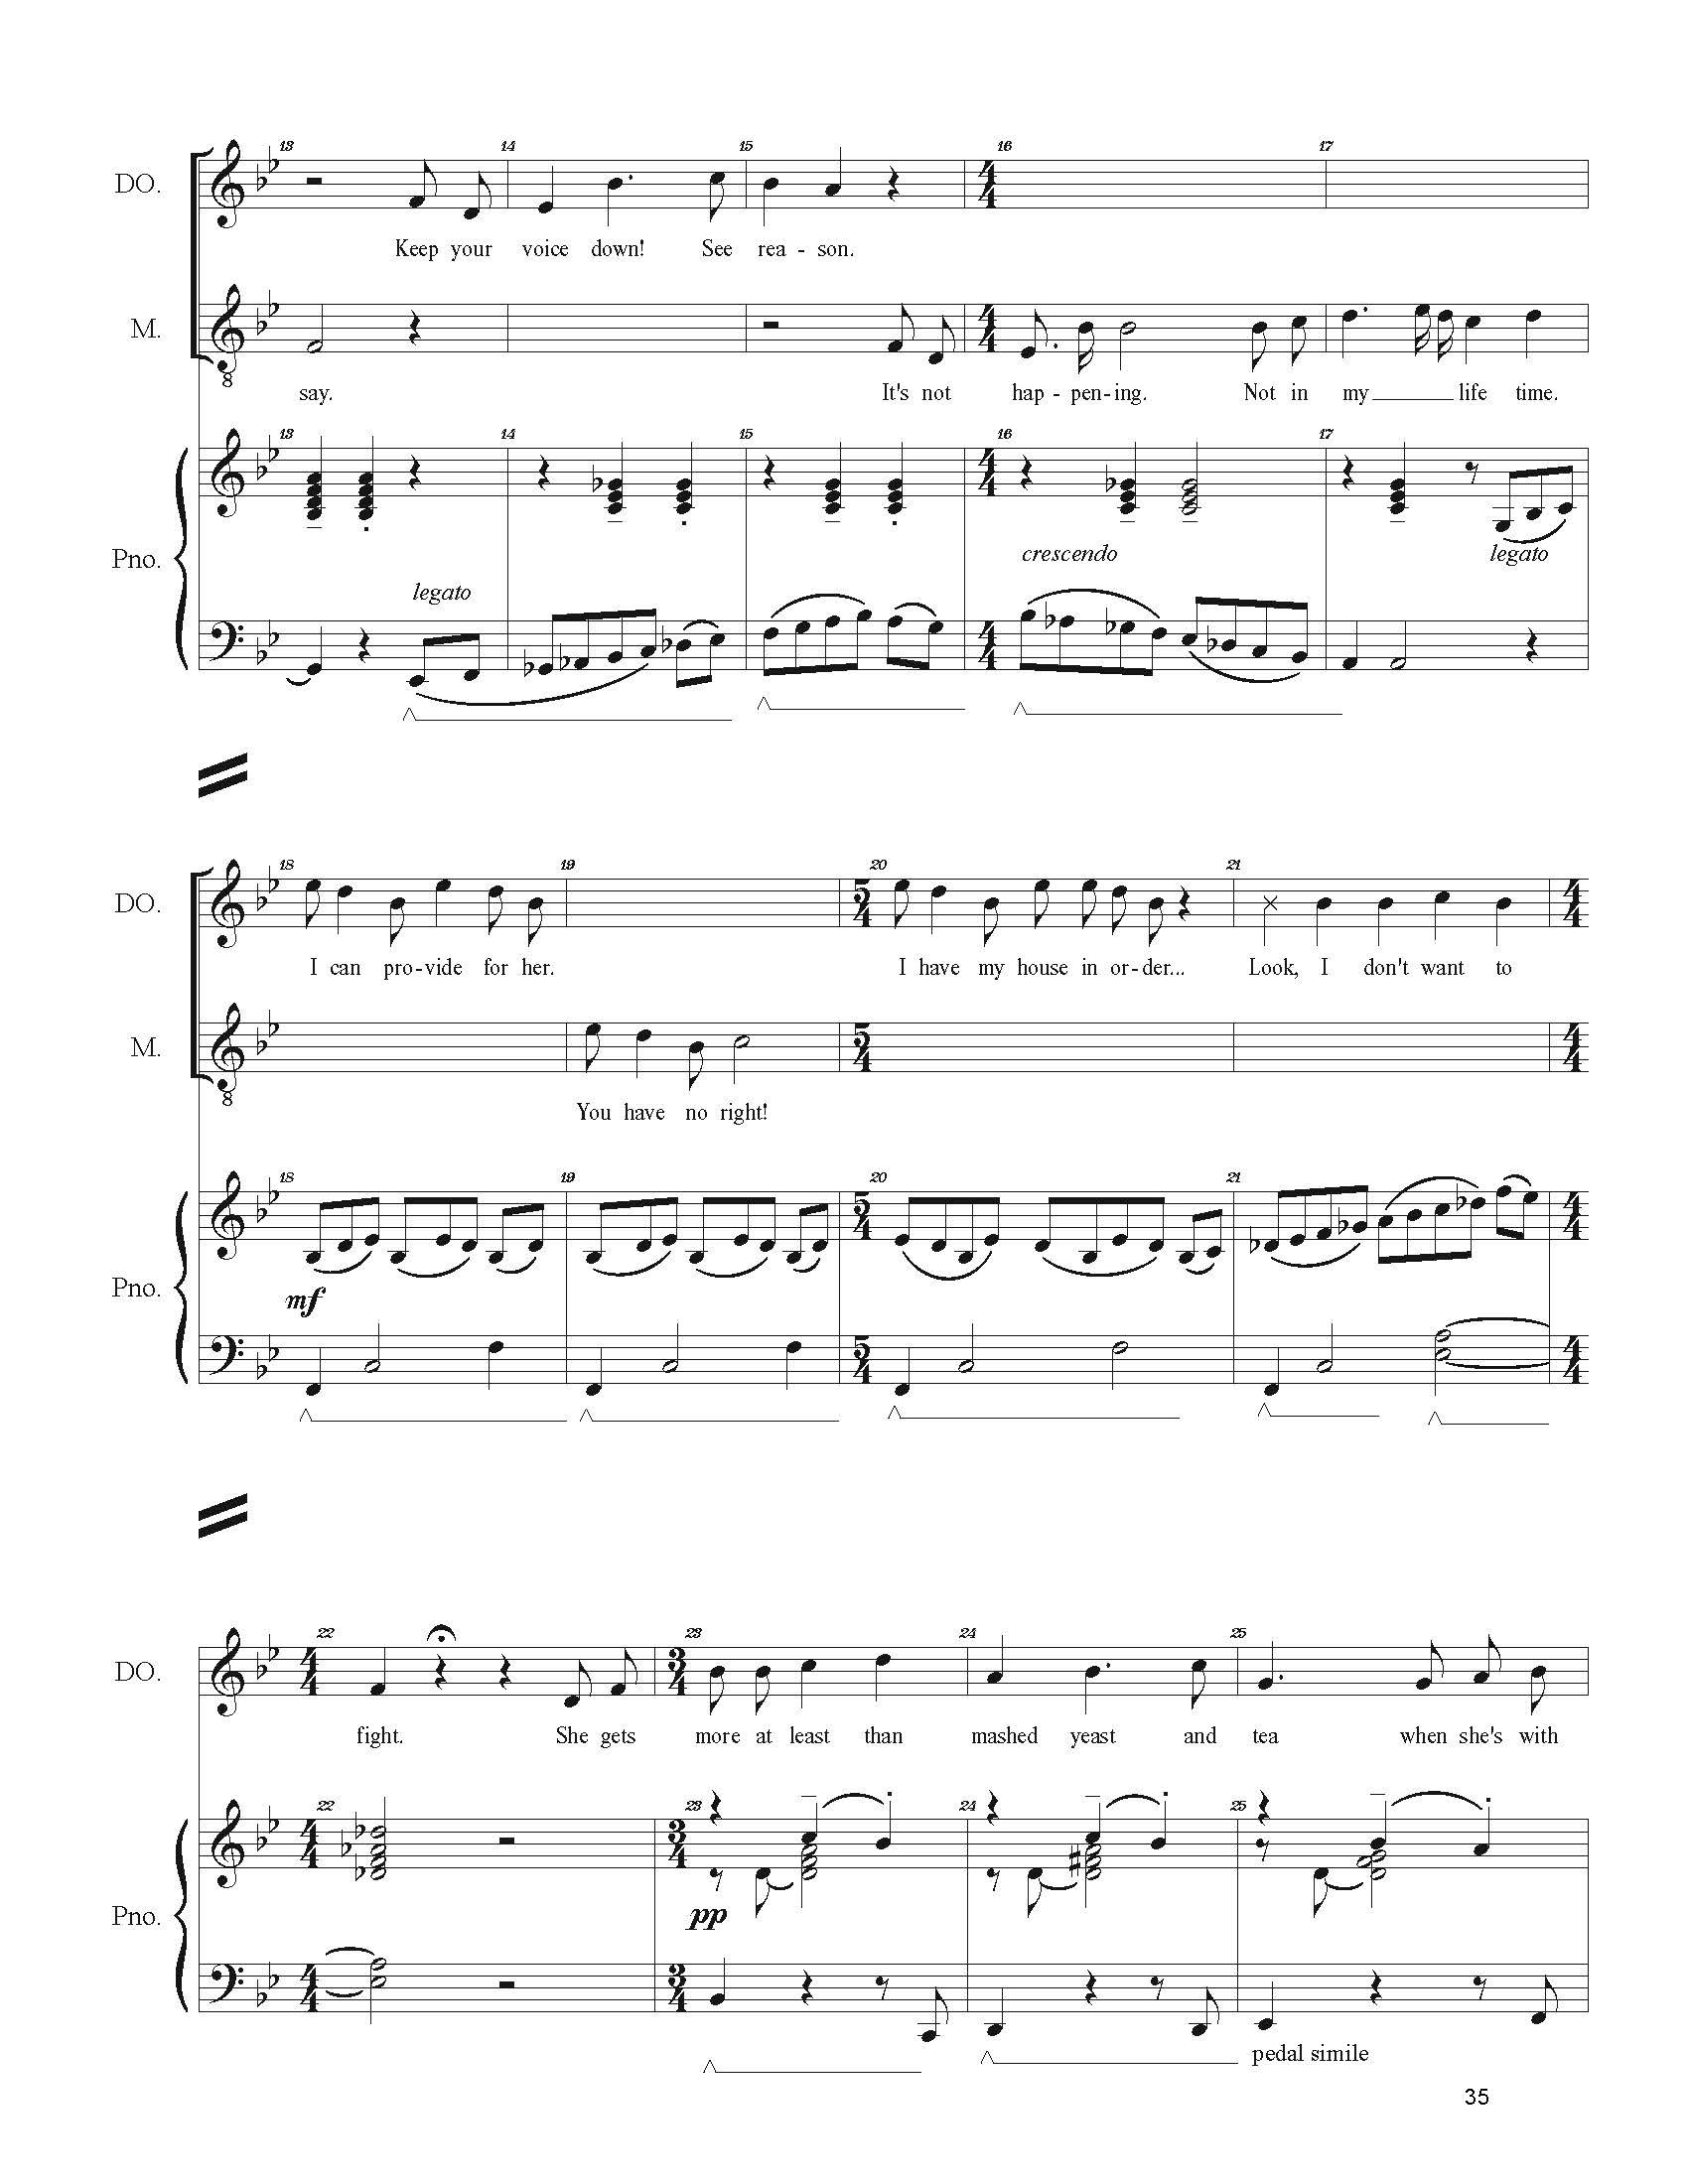 FULL PIANO VOCAL SCORE DRAFT 1 - Score_Page_035.jpg